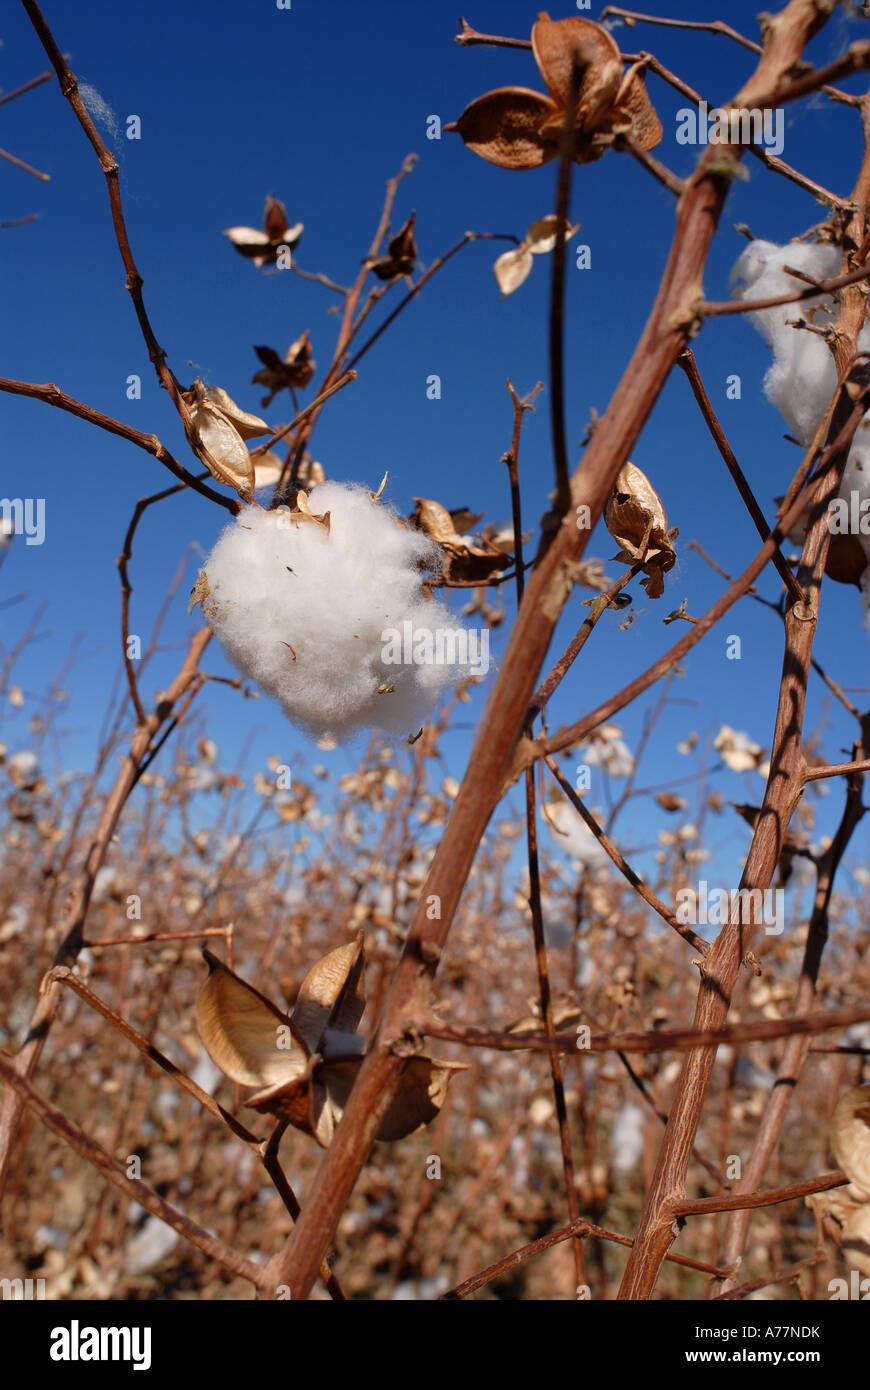 Cotton fields outside of Blythe, California Stock Photo